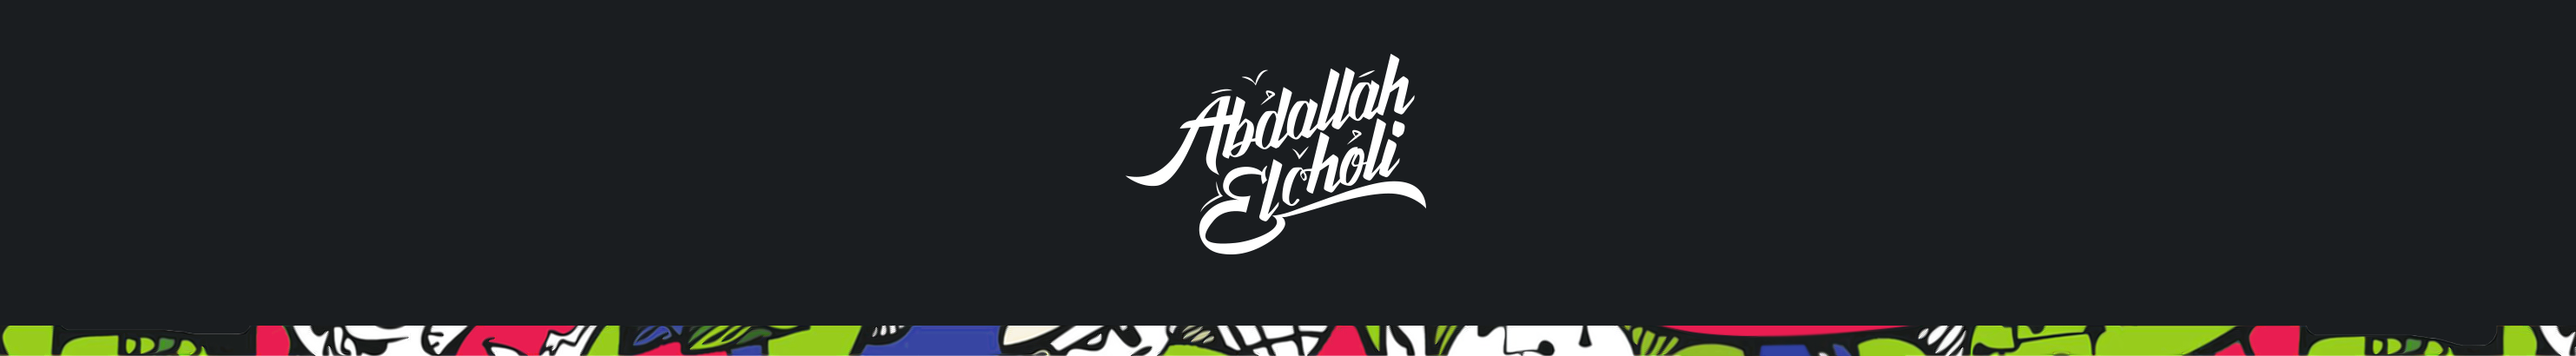 Profil-Banner von Abdallah El Choli